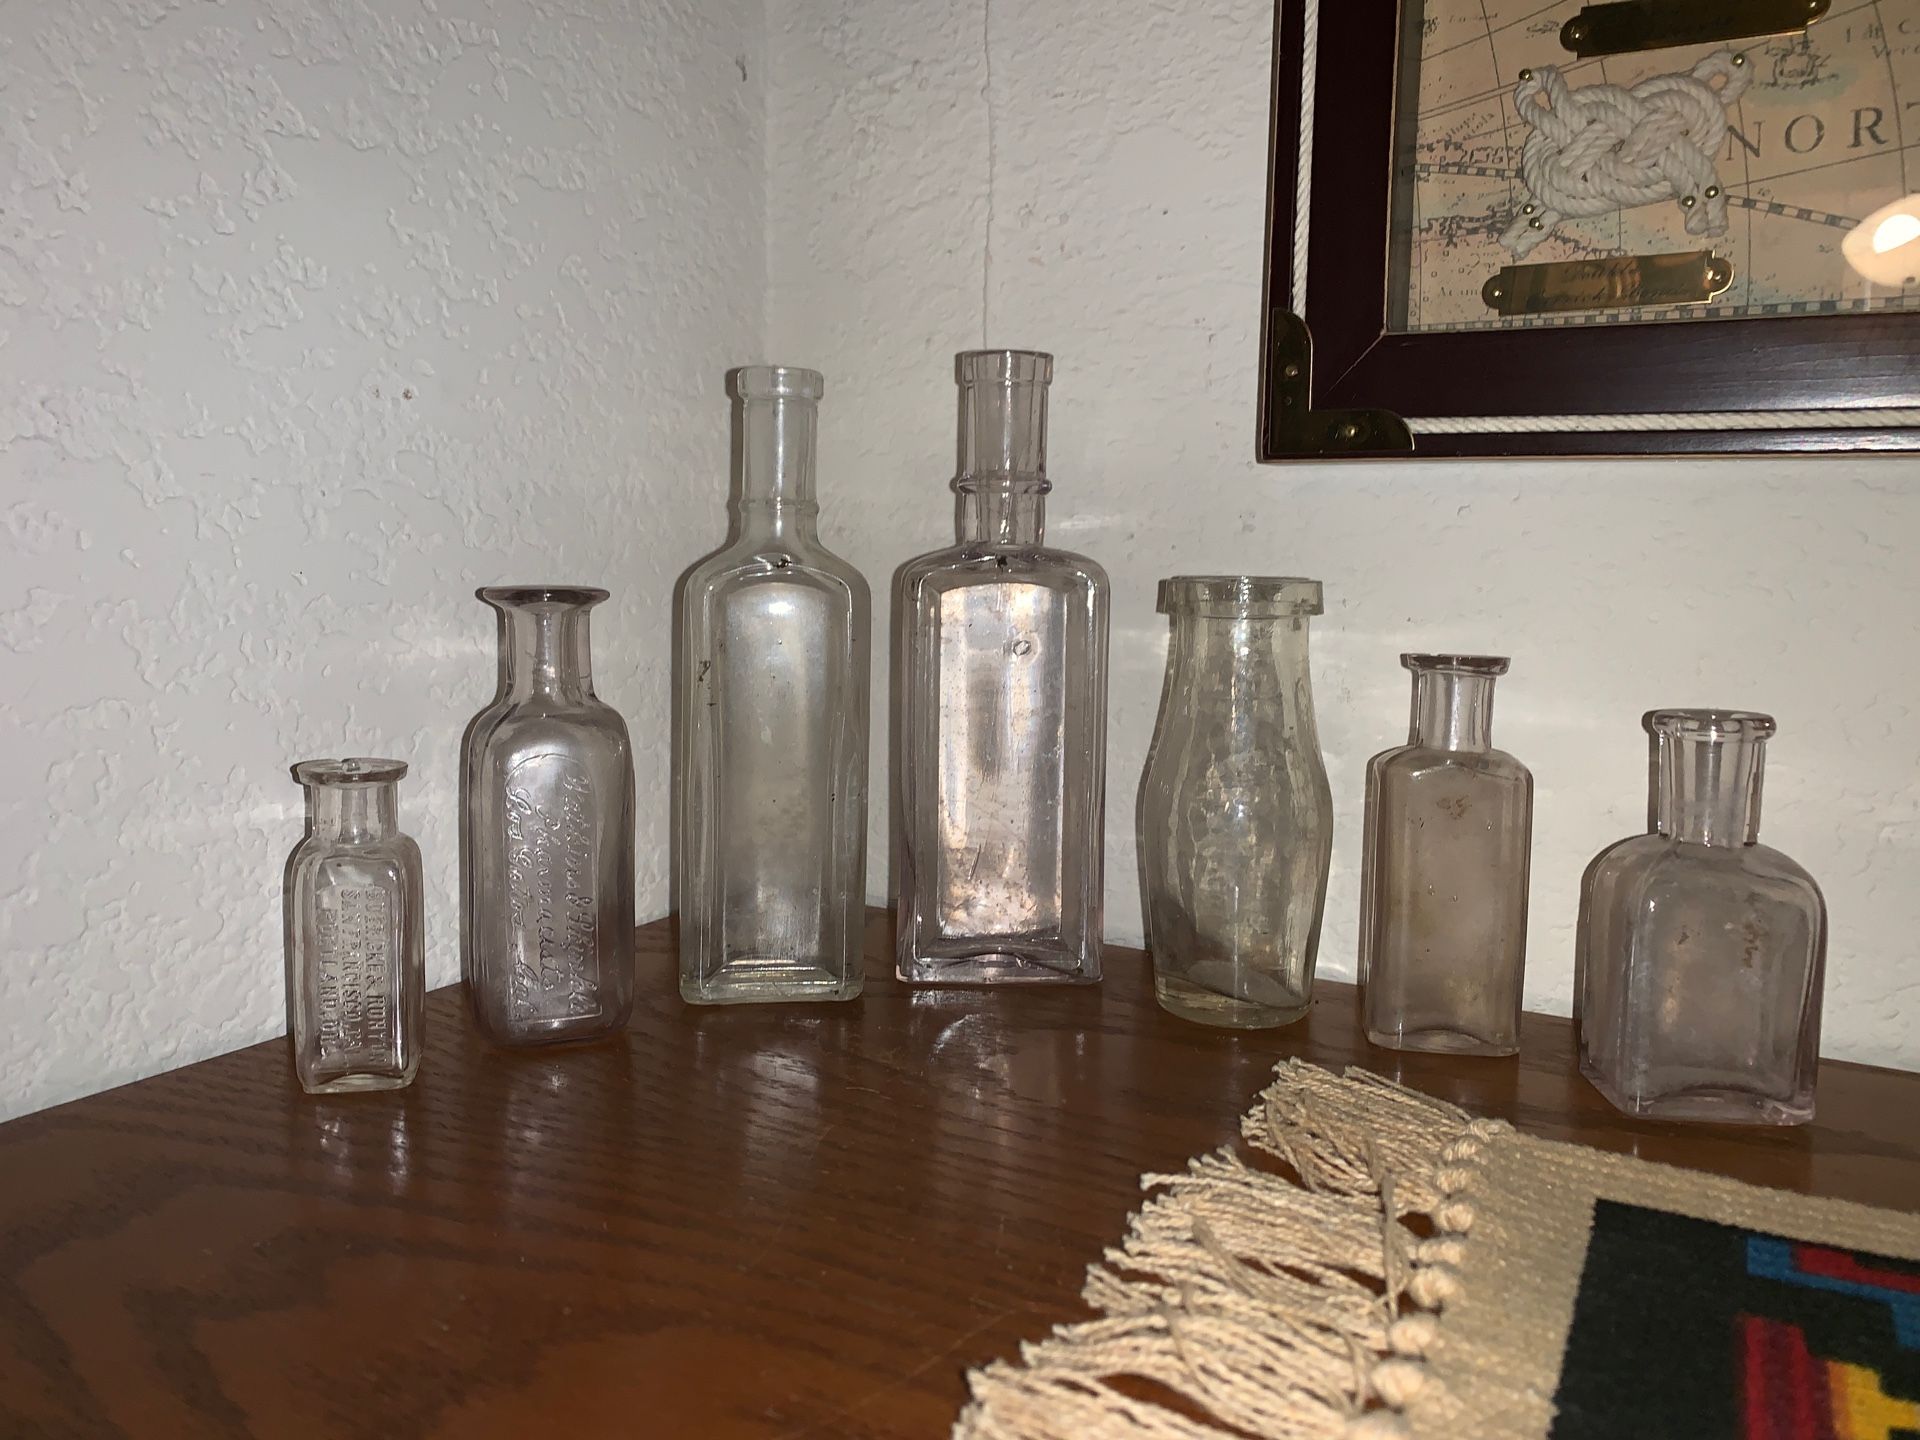 Antique Medicine and Alchemy bottles